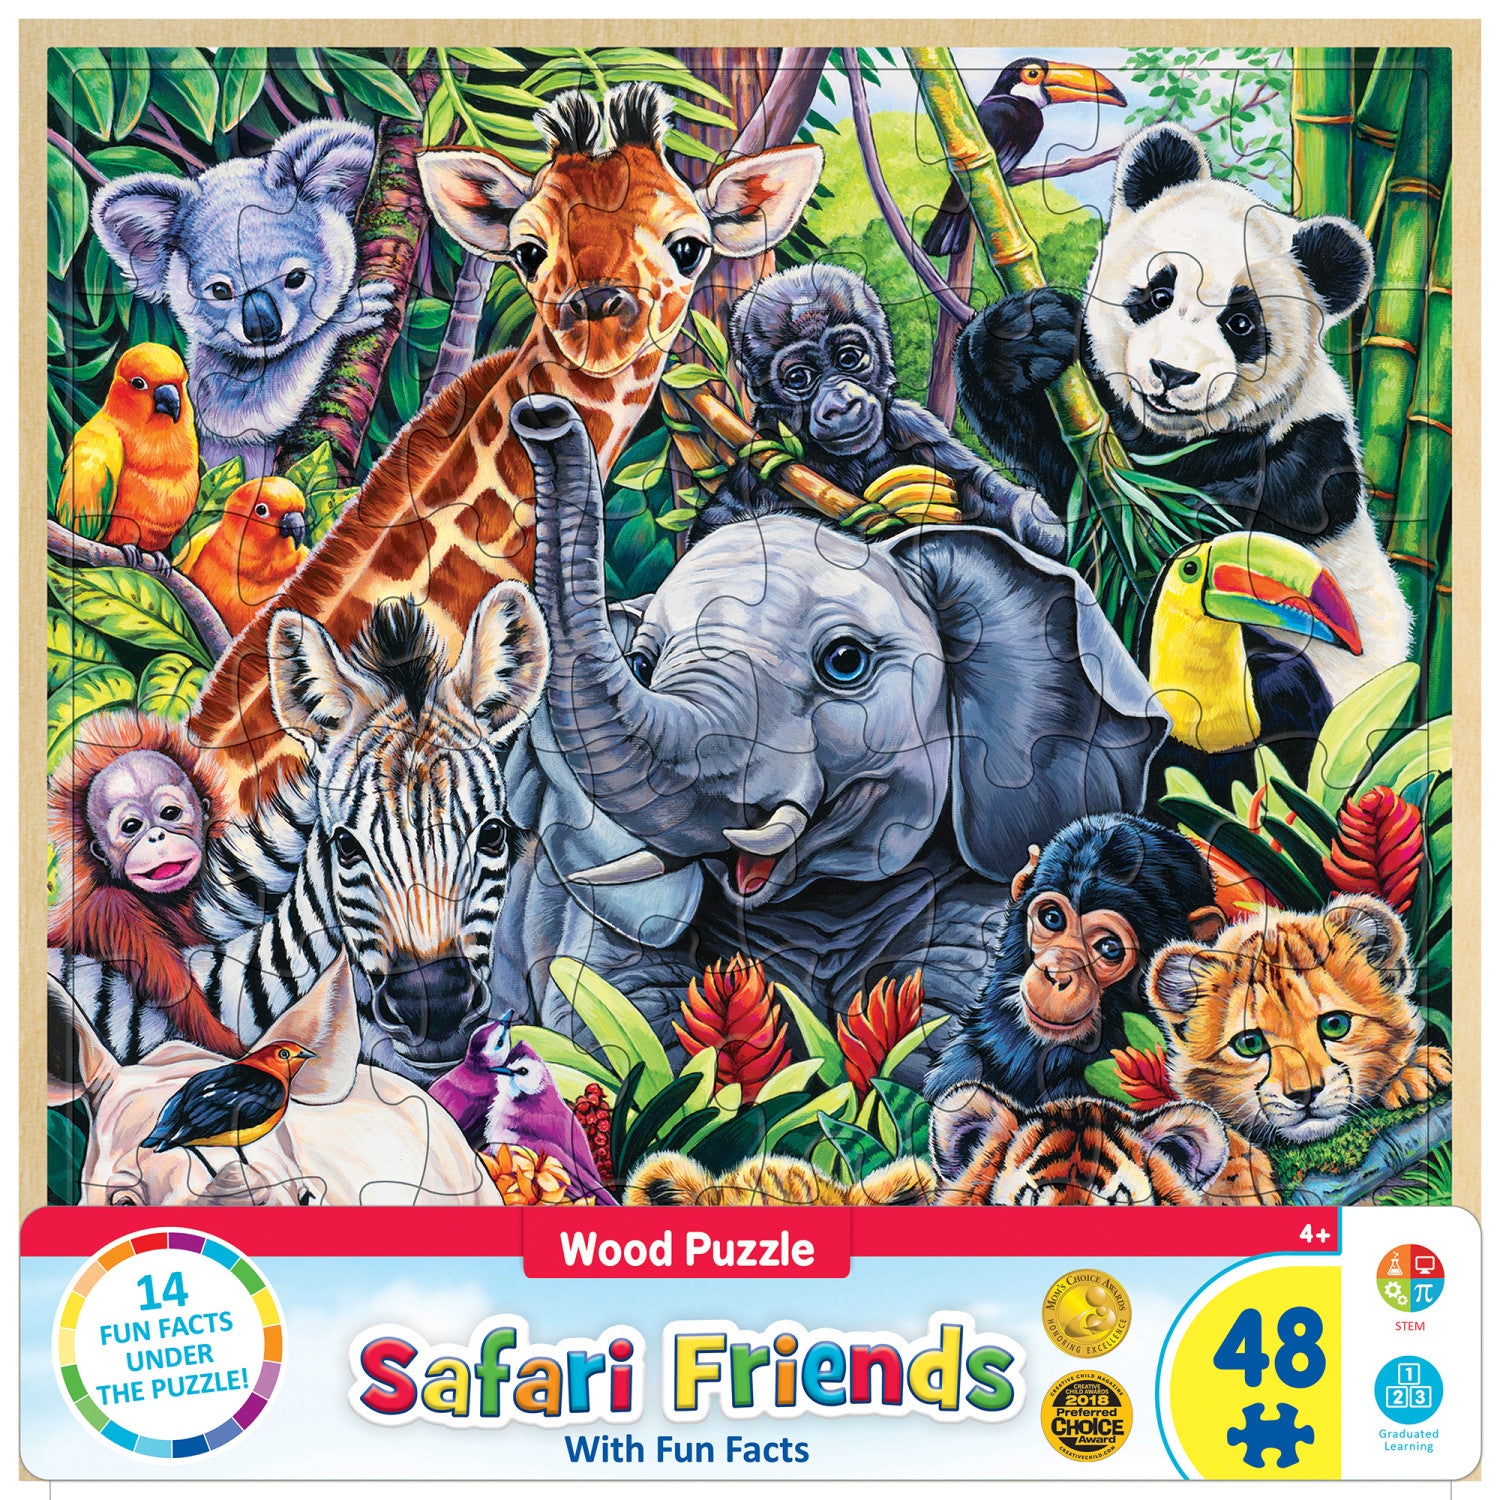 Wood Fun Facts - Safari Friends 48 Piece Wood Puzzle